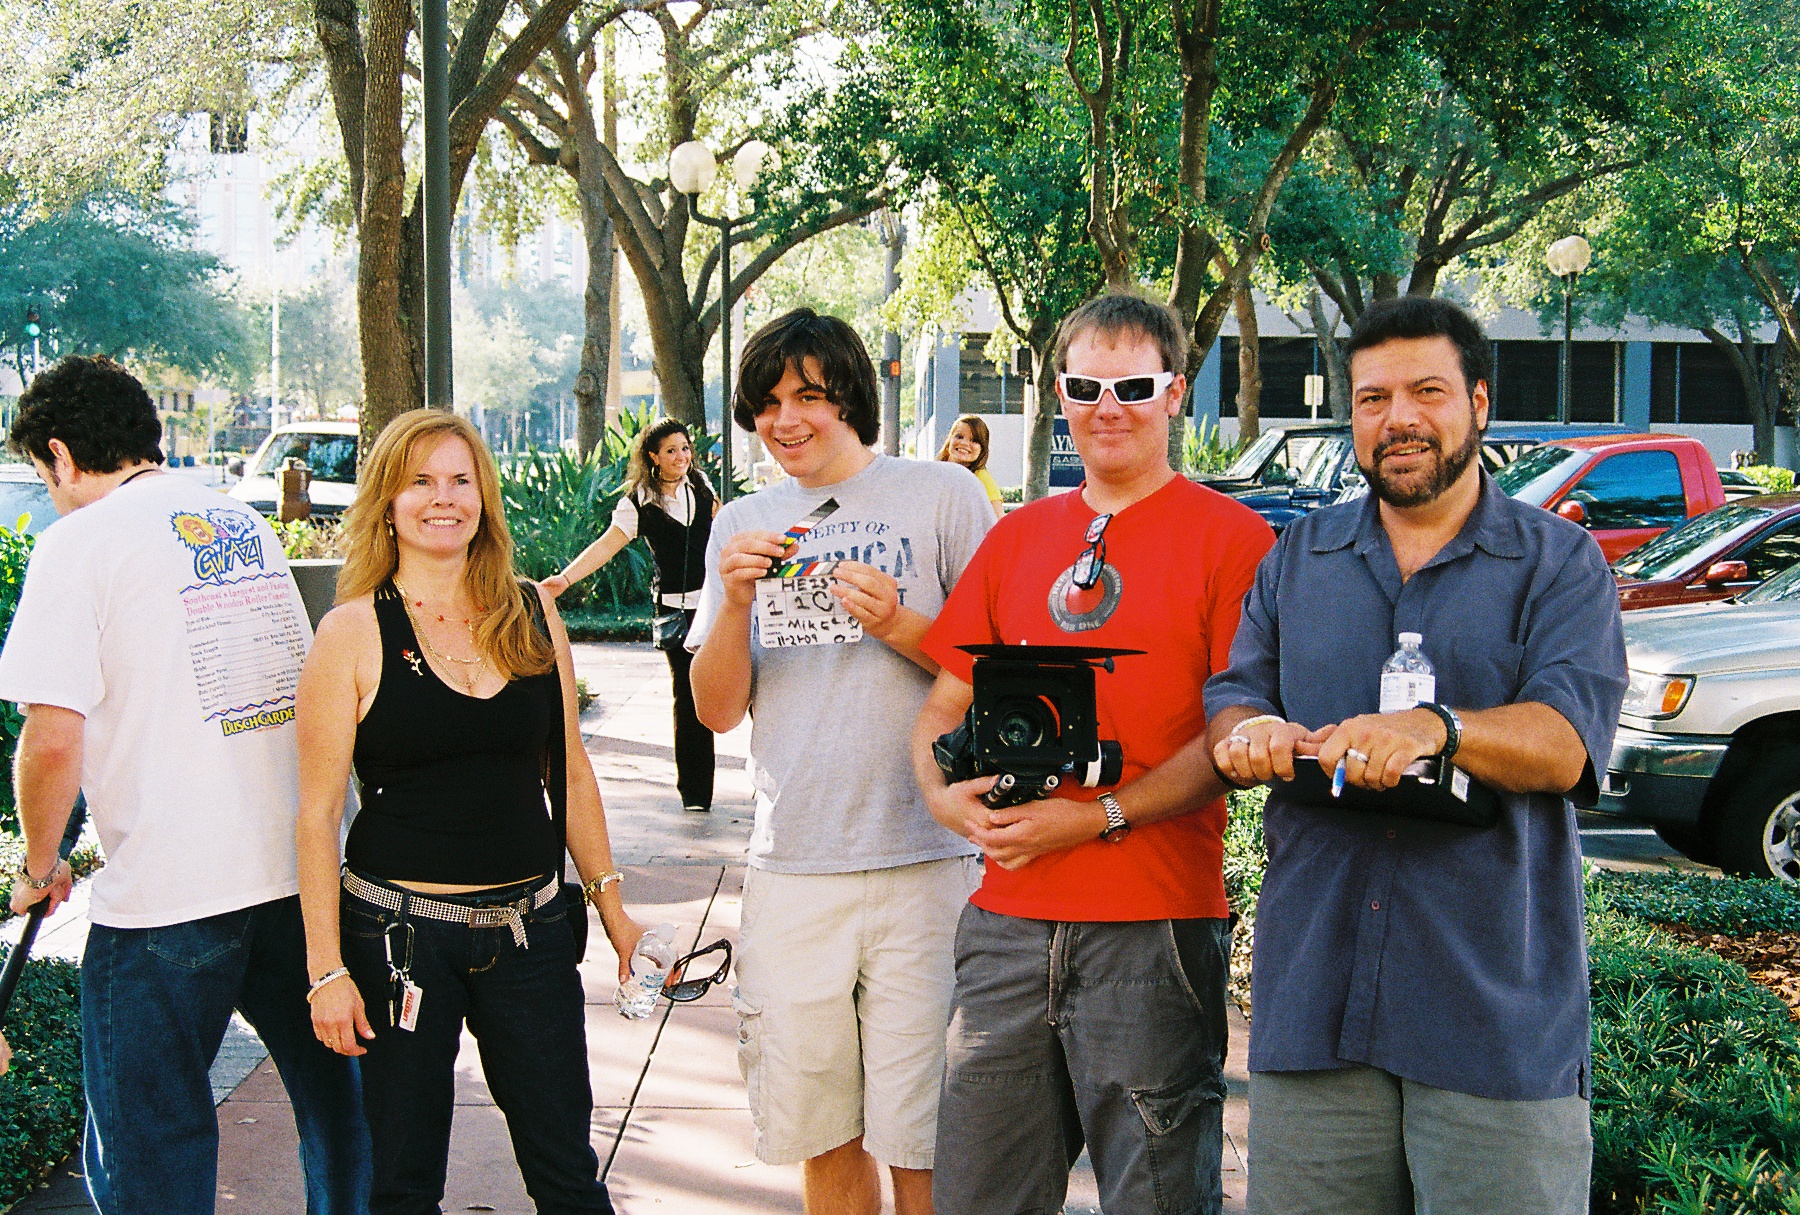 On set of film Heist with Evan Carnevali, Gustavo Carnevali, Mike Lopes and Chelsi Archembeau St. Petersburg, Florida